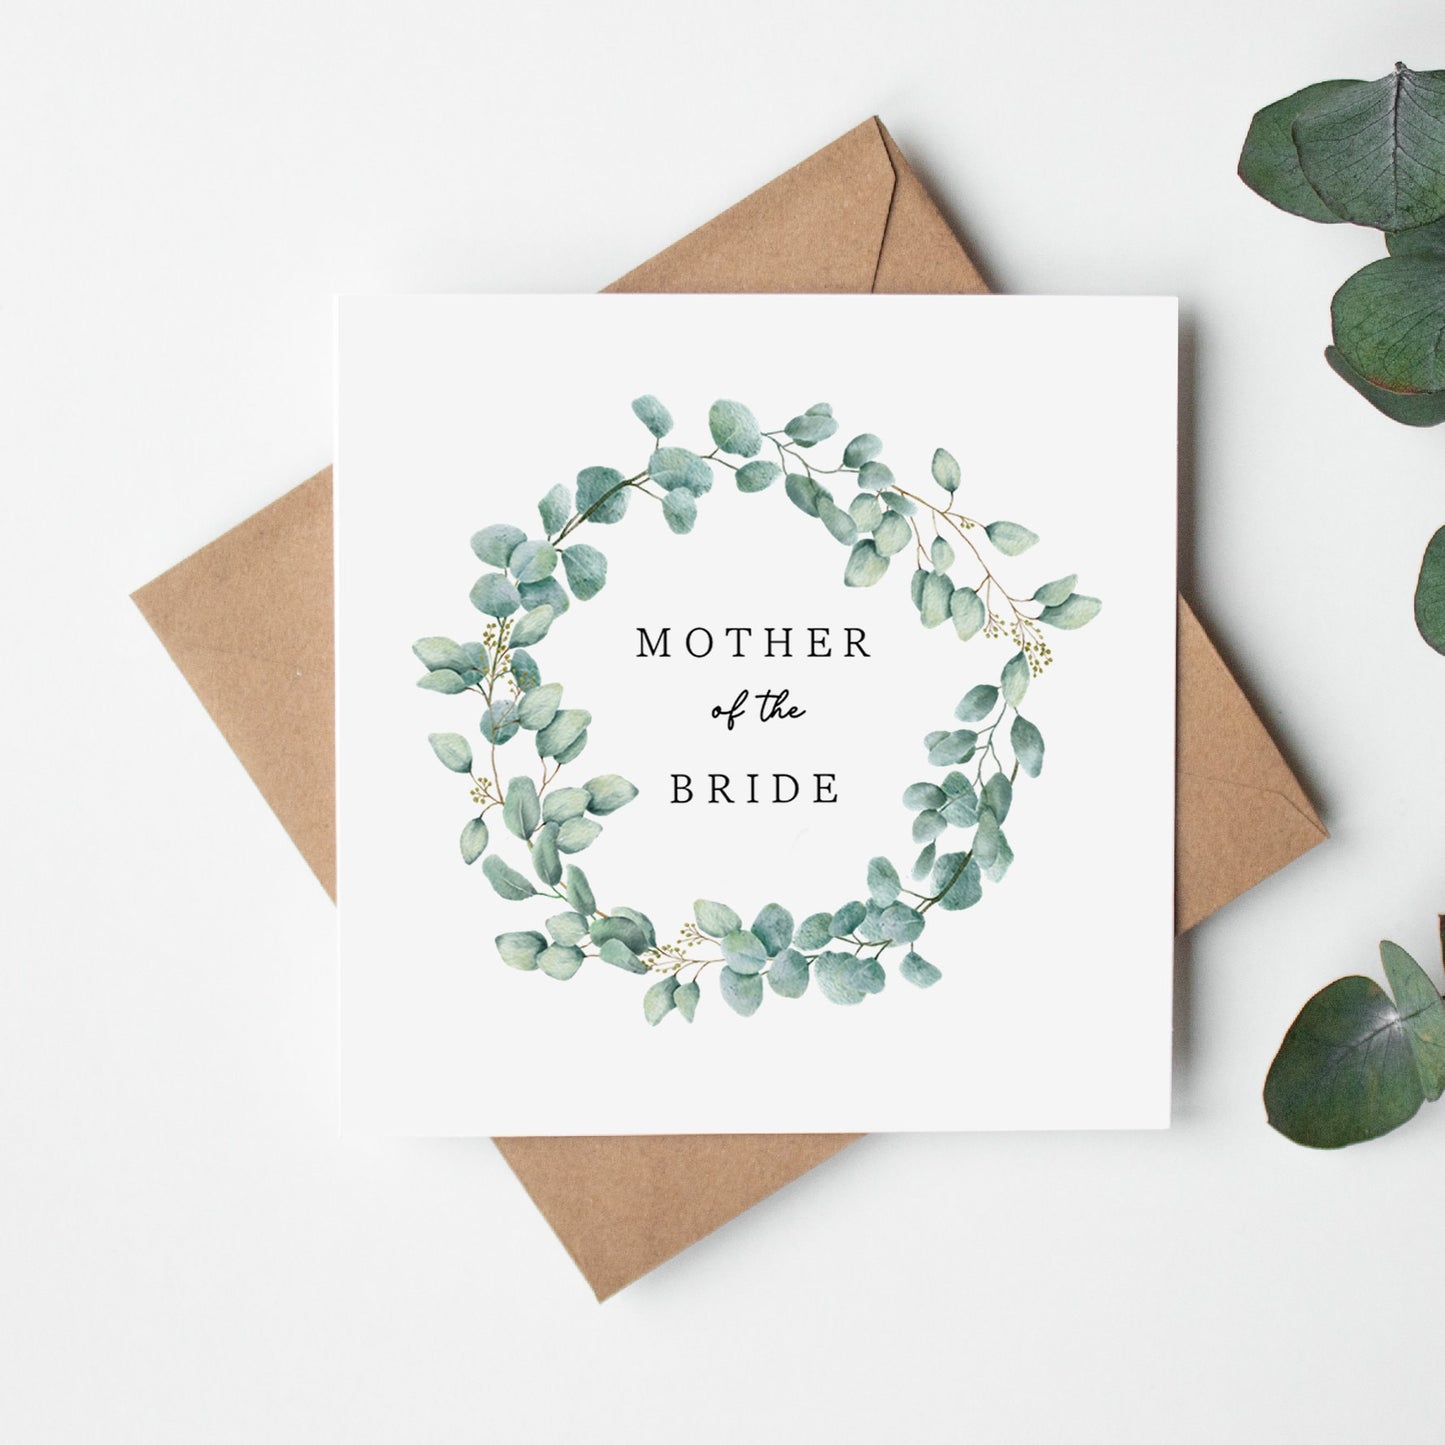 Mother of the Bride Card - Eucalyptus Wreath